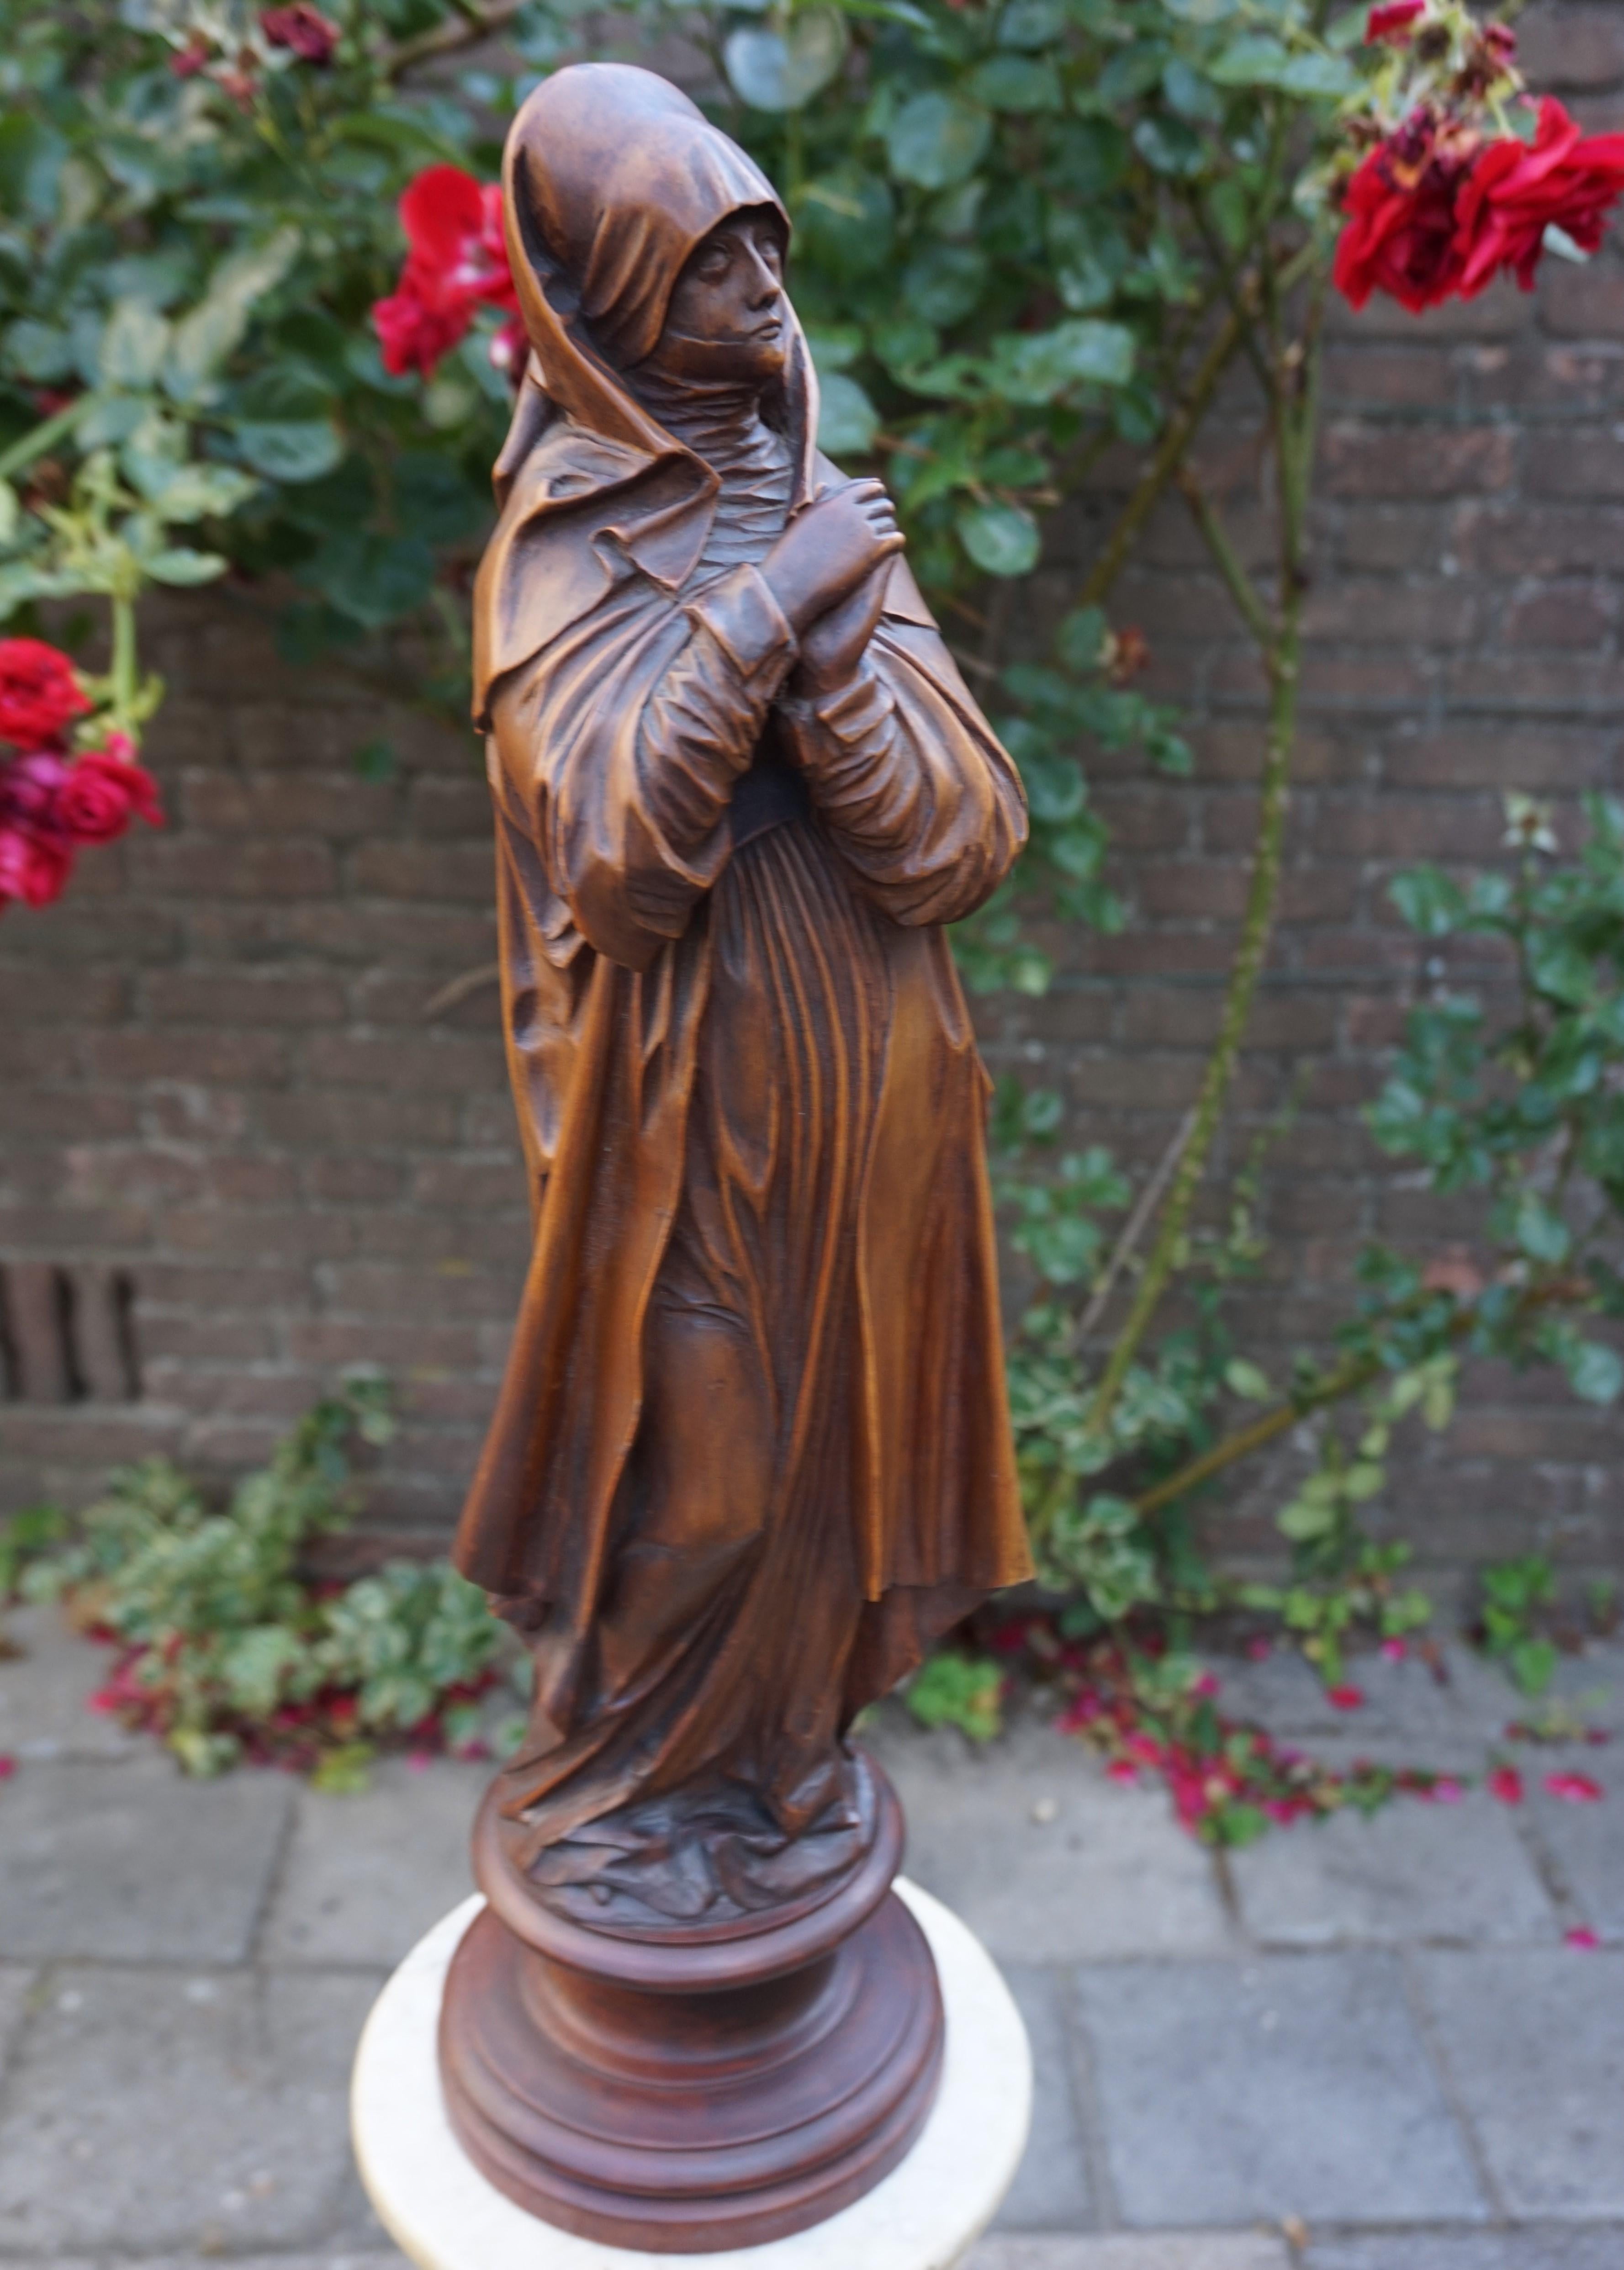 Stunning work of art with a beautiful patina.

Saint Teresa of Ávila, born Teresa Sánchez de Cepeda y Ahumada, also called Saint Teresa of Jesus (1515-1582), was a Spanish noblewoman who chose a monastic life in the Roman Catholic Church. This